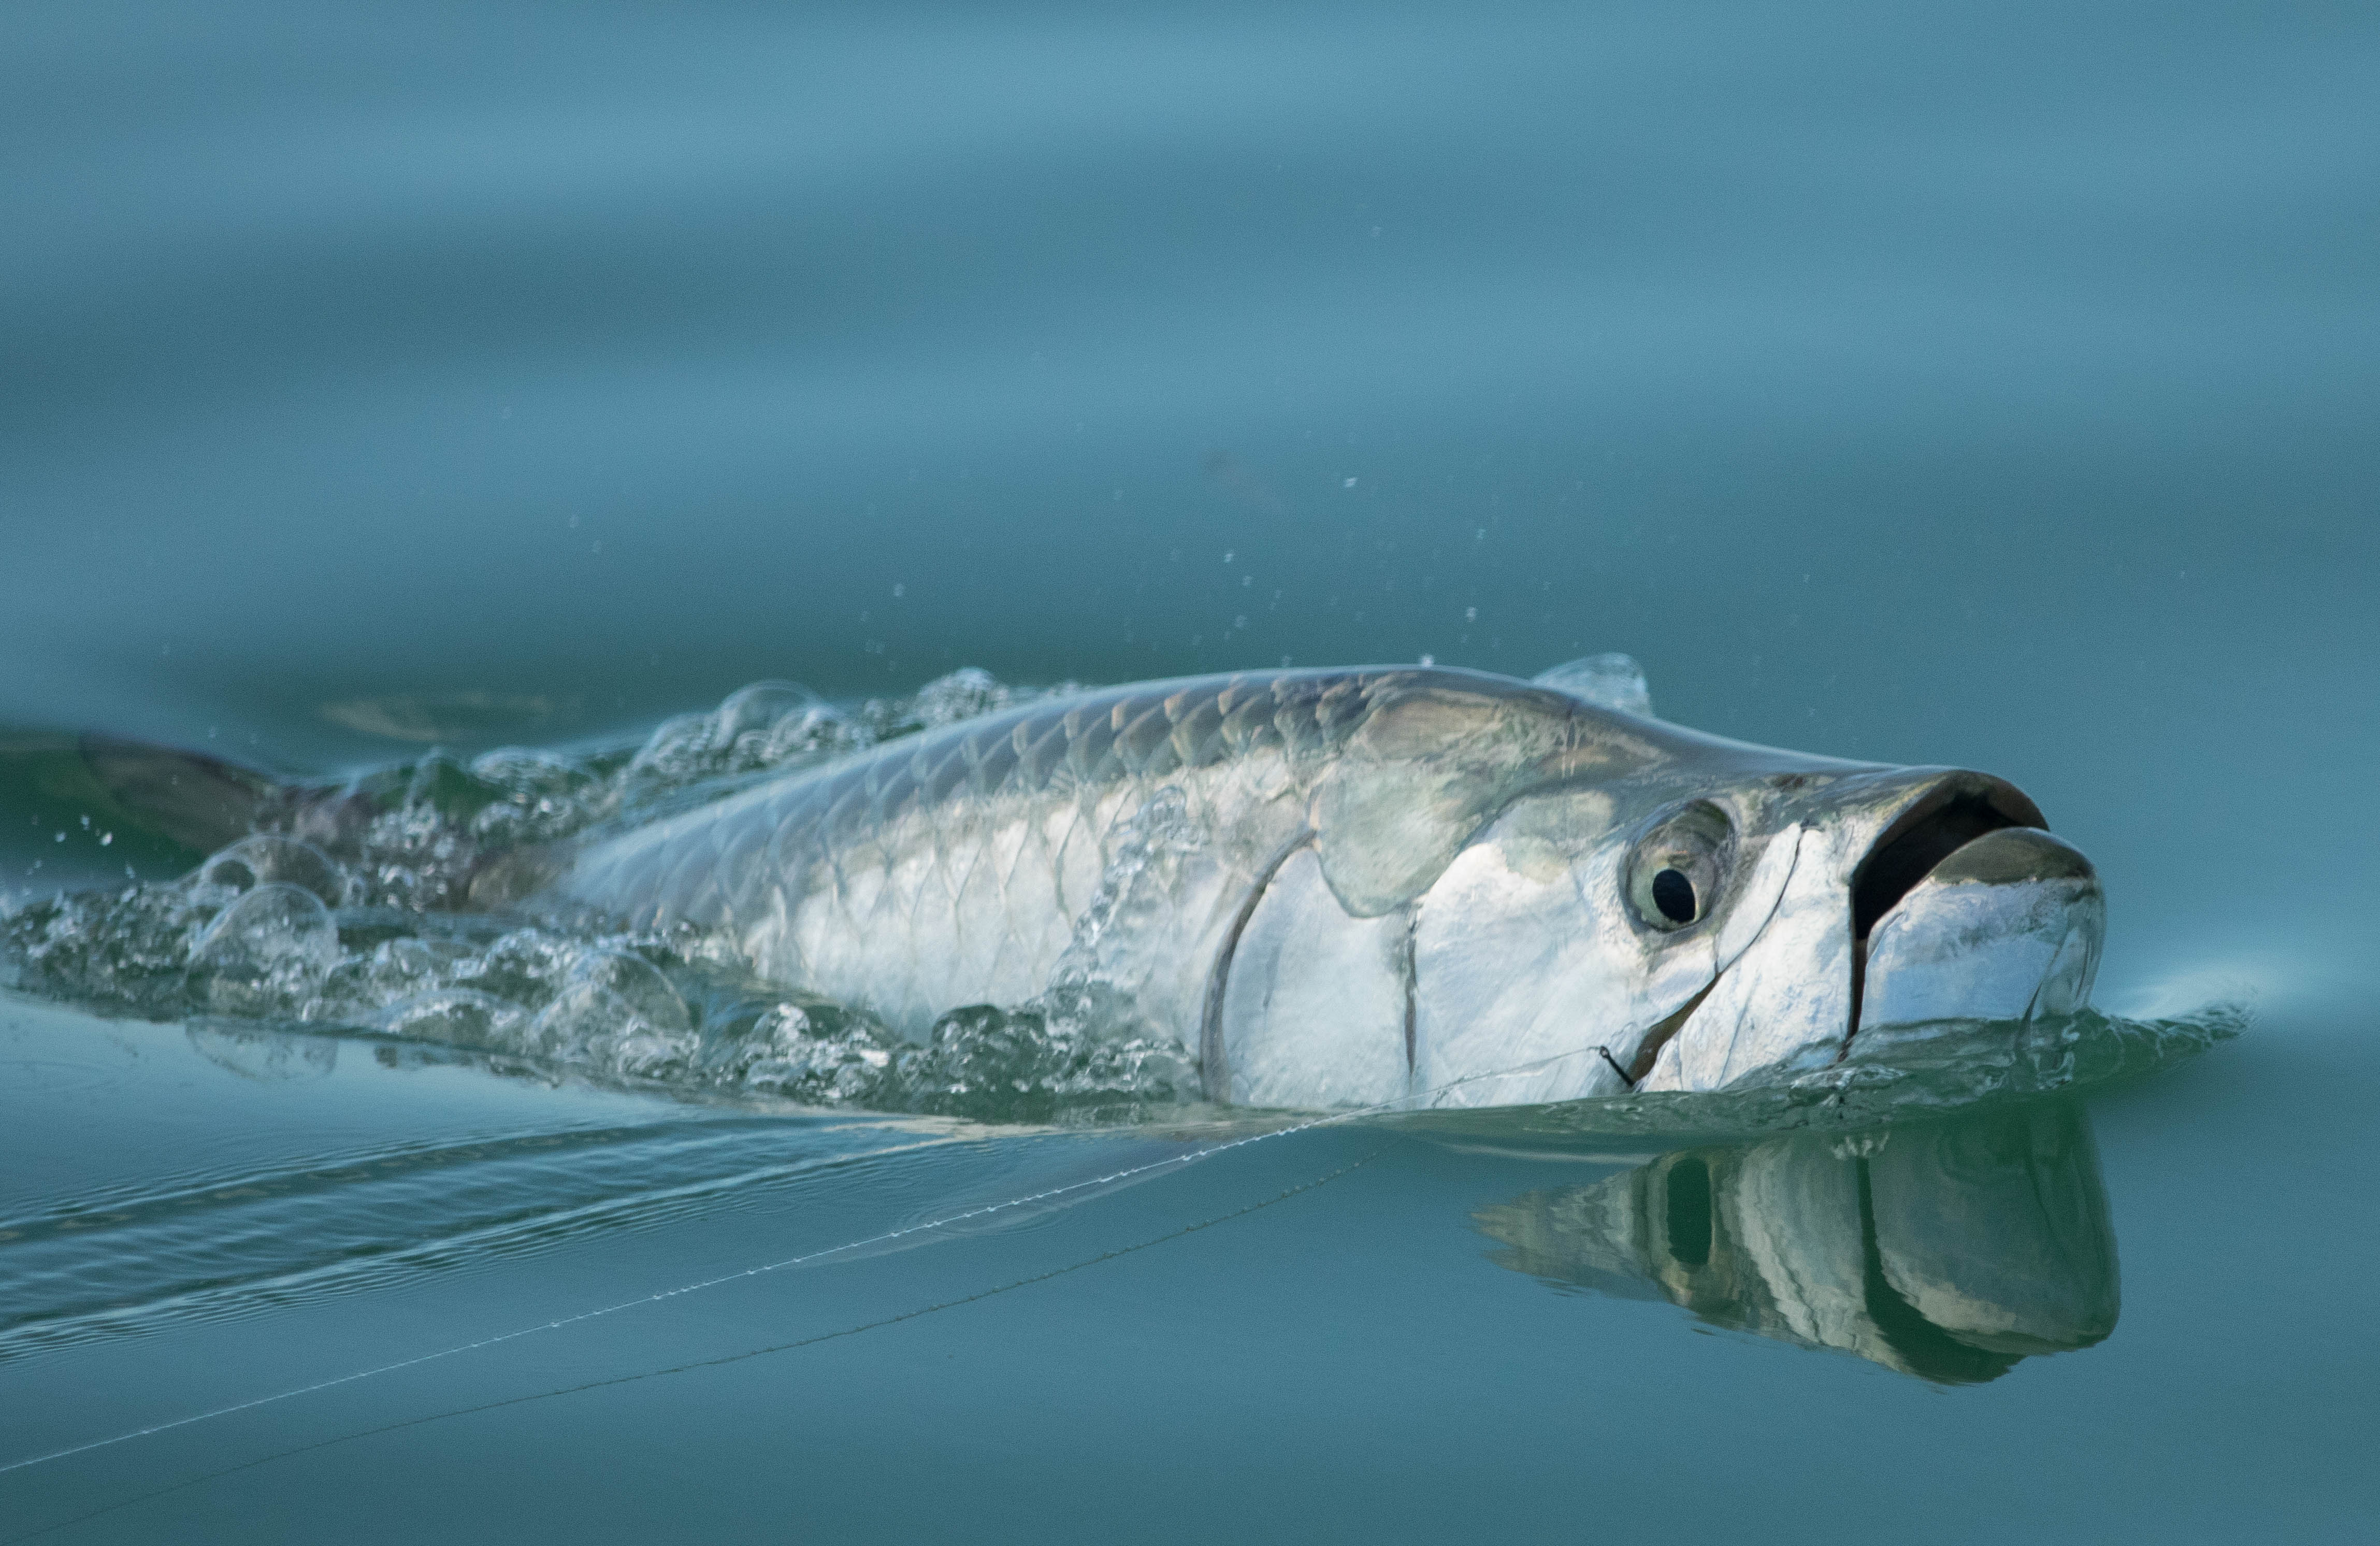 Tarpon gulp air to get oxygen as well breath through their gills like normal fish.